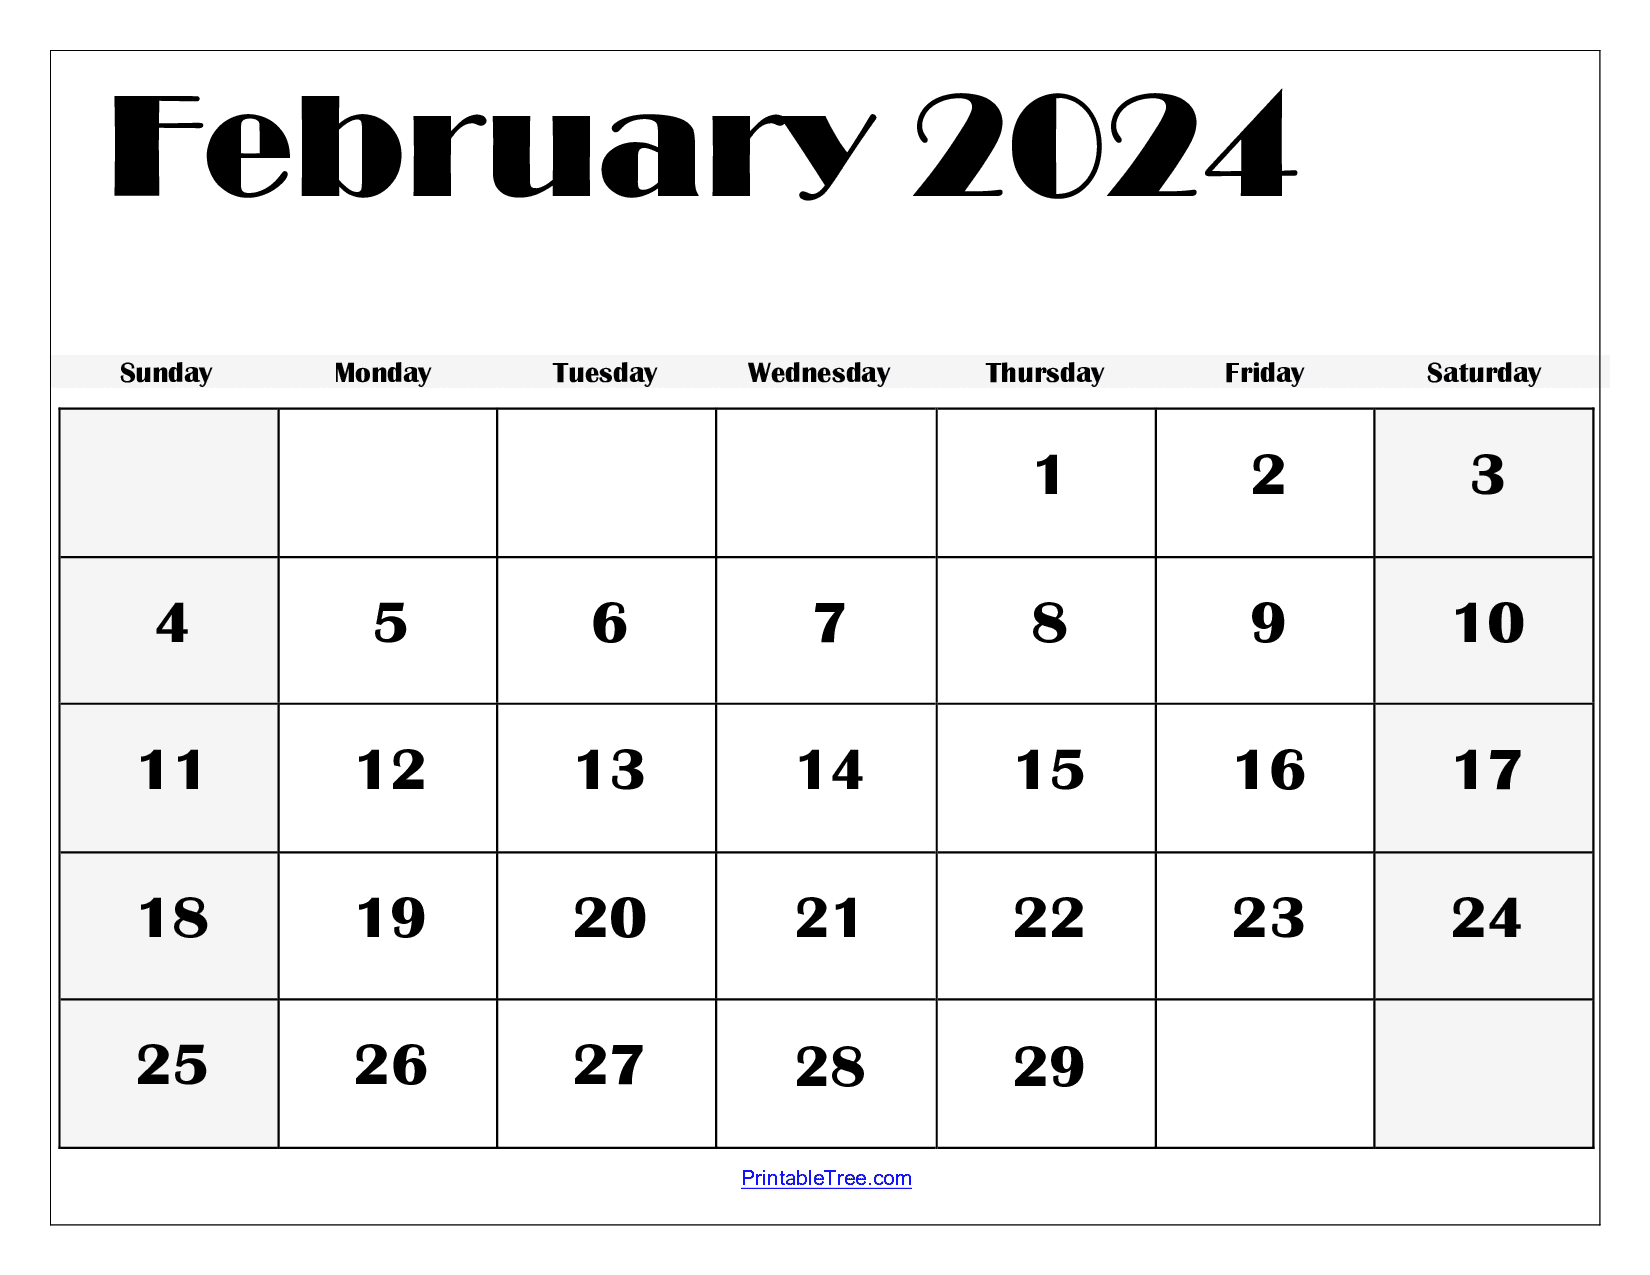 February 2024 Calendar Printable Pdf Template With Holidays for Monthly Calendar February 2024 Printable